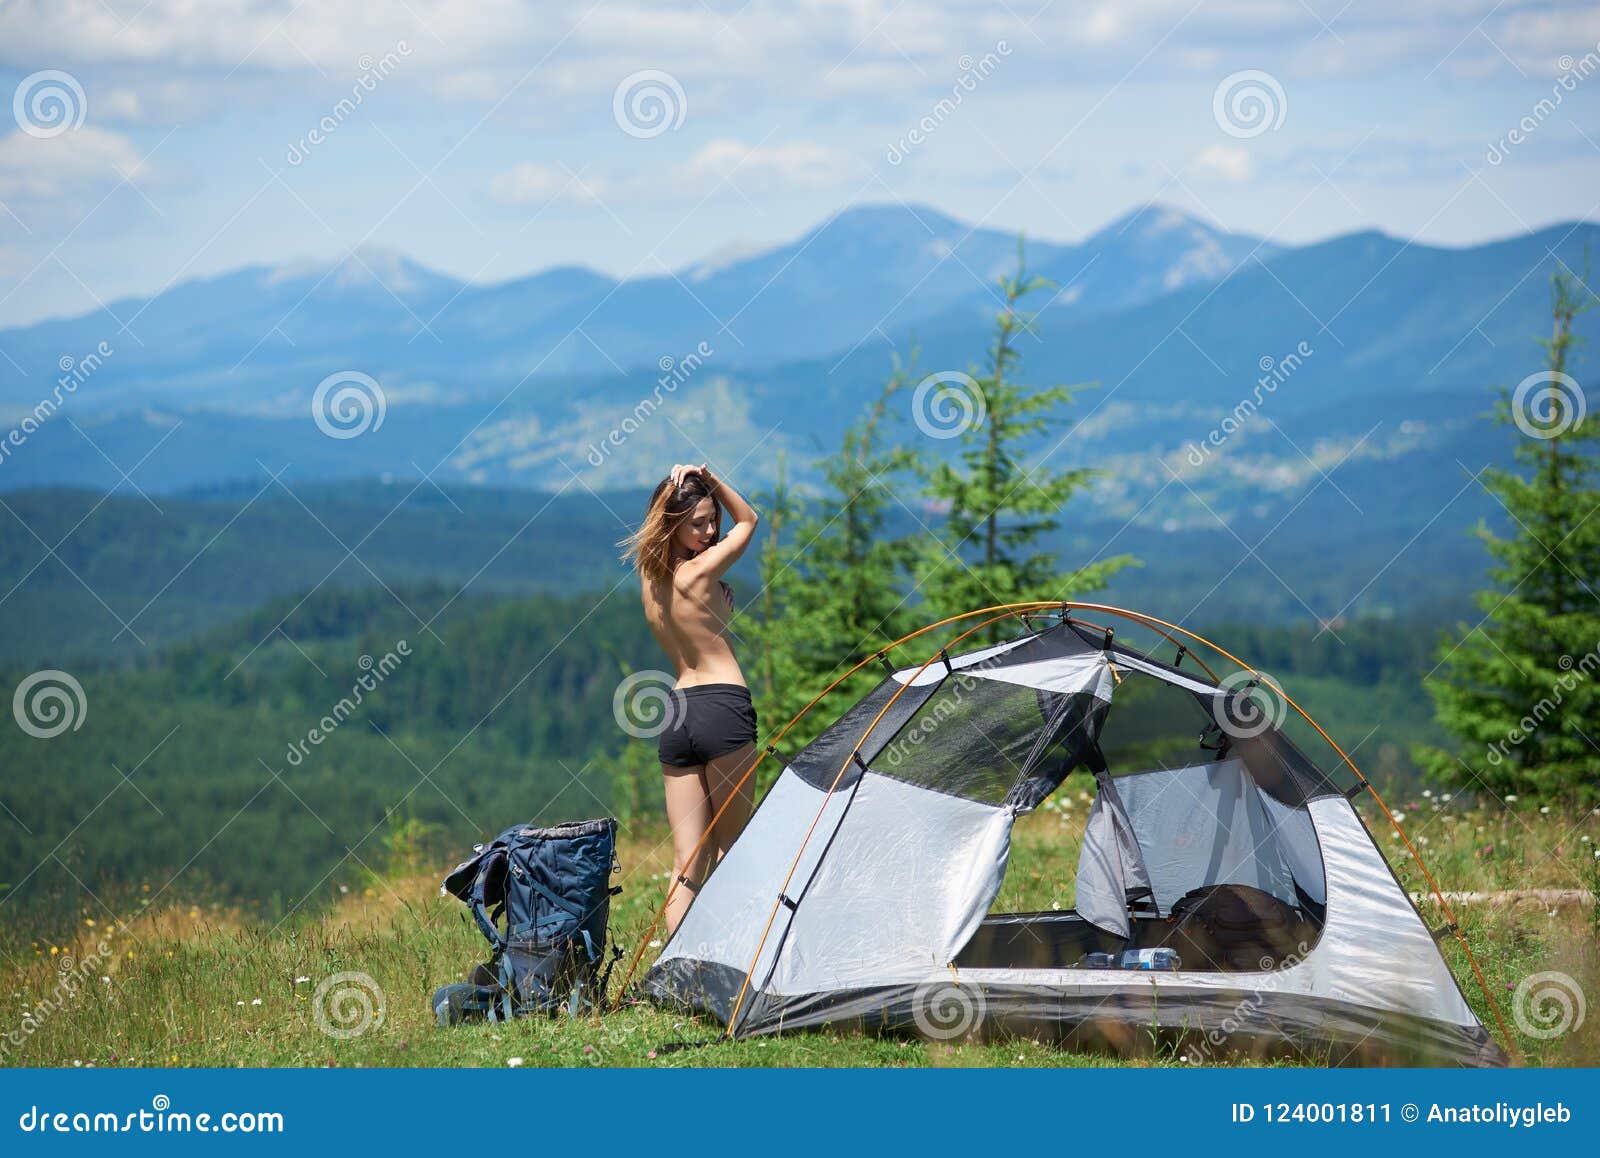 alonzo carr share nude camping teens photos